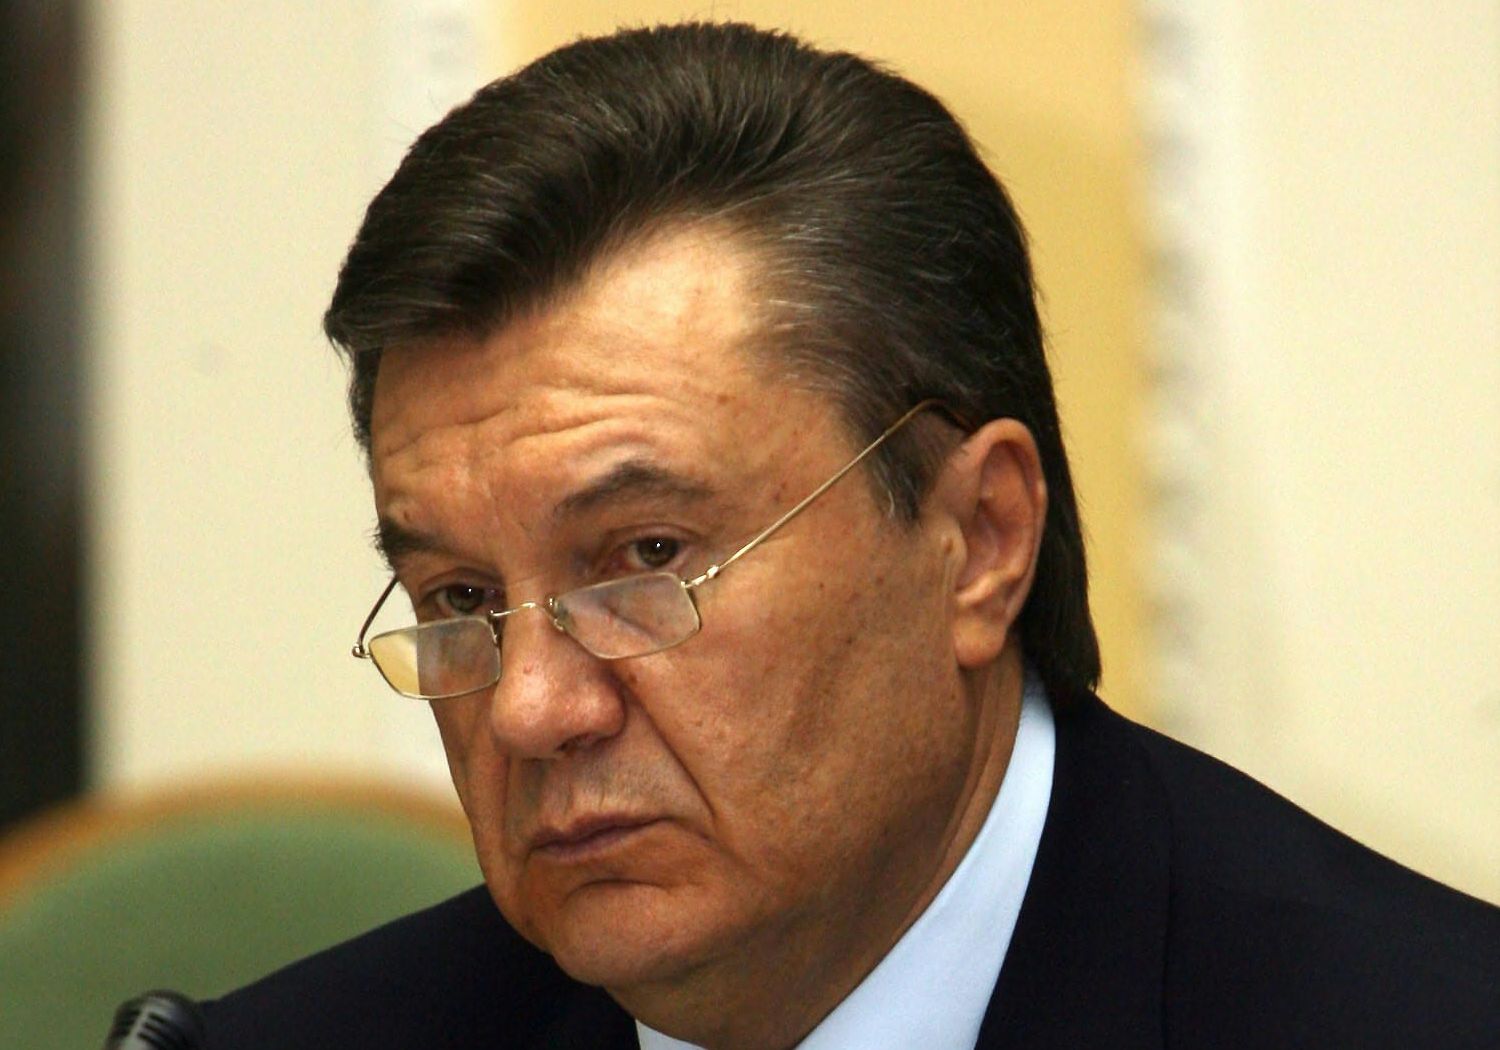 СМИ: у Виктора Януковича инфаркт, он в тяжелом состоянии